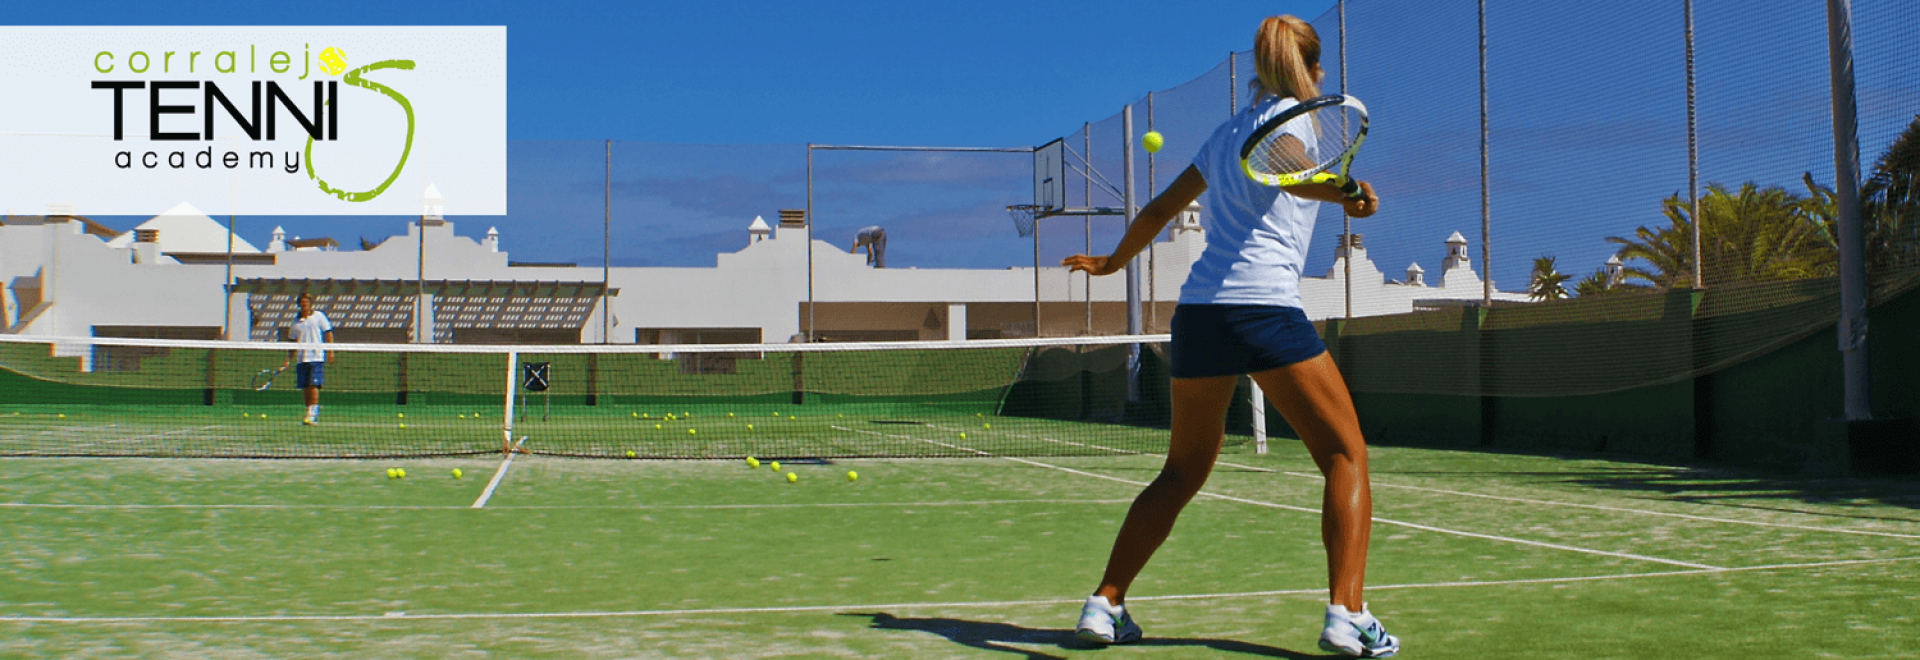 Corralejo Tennis Academy, Canary Islands - Book. Travel. Play.